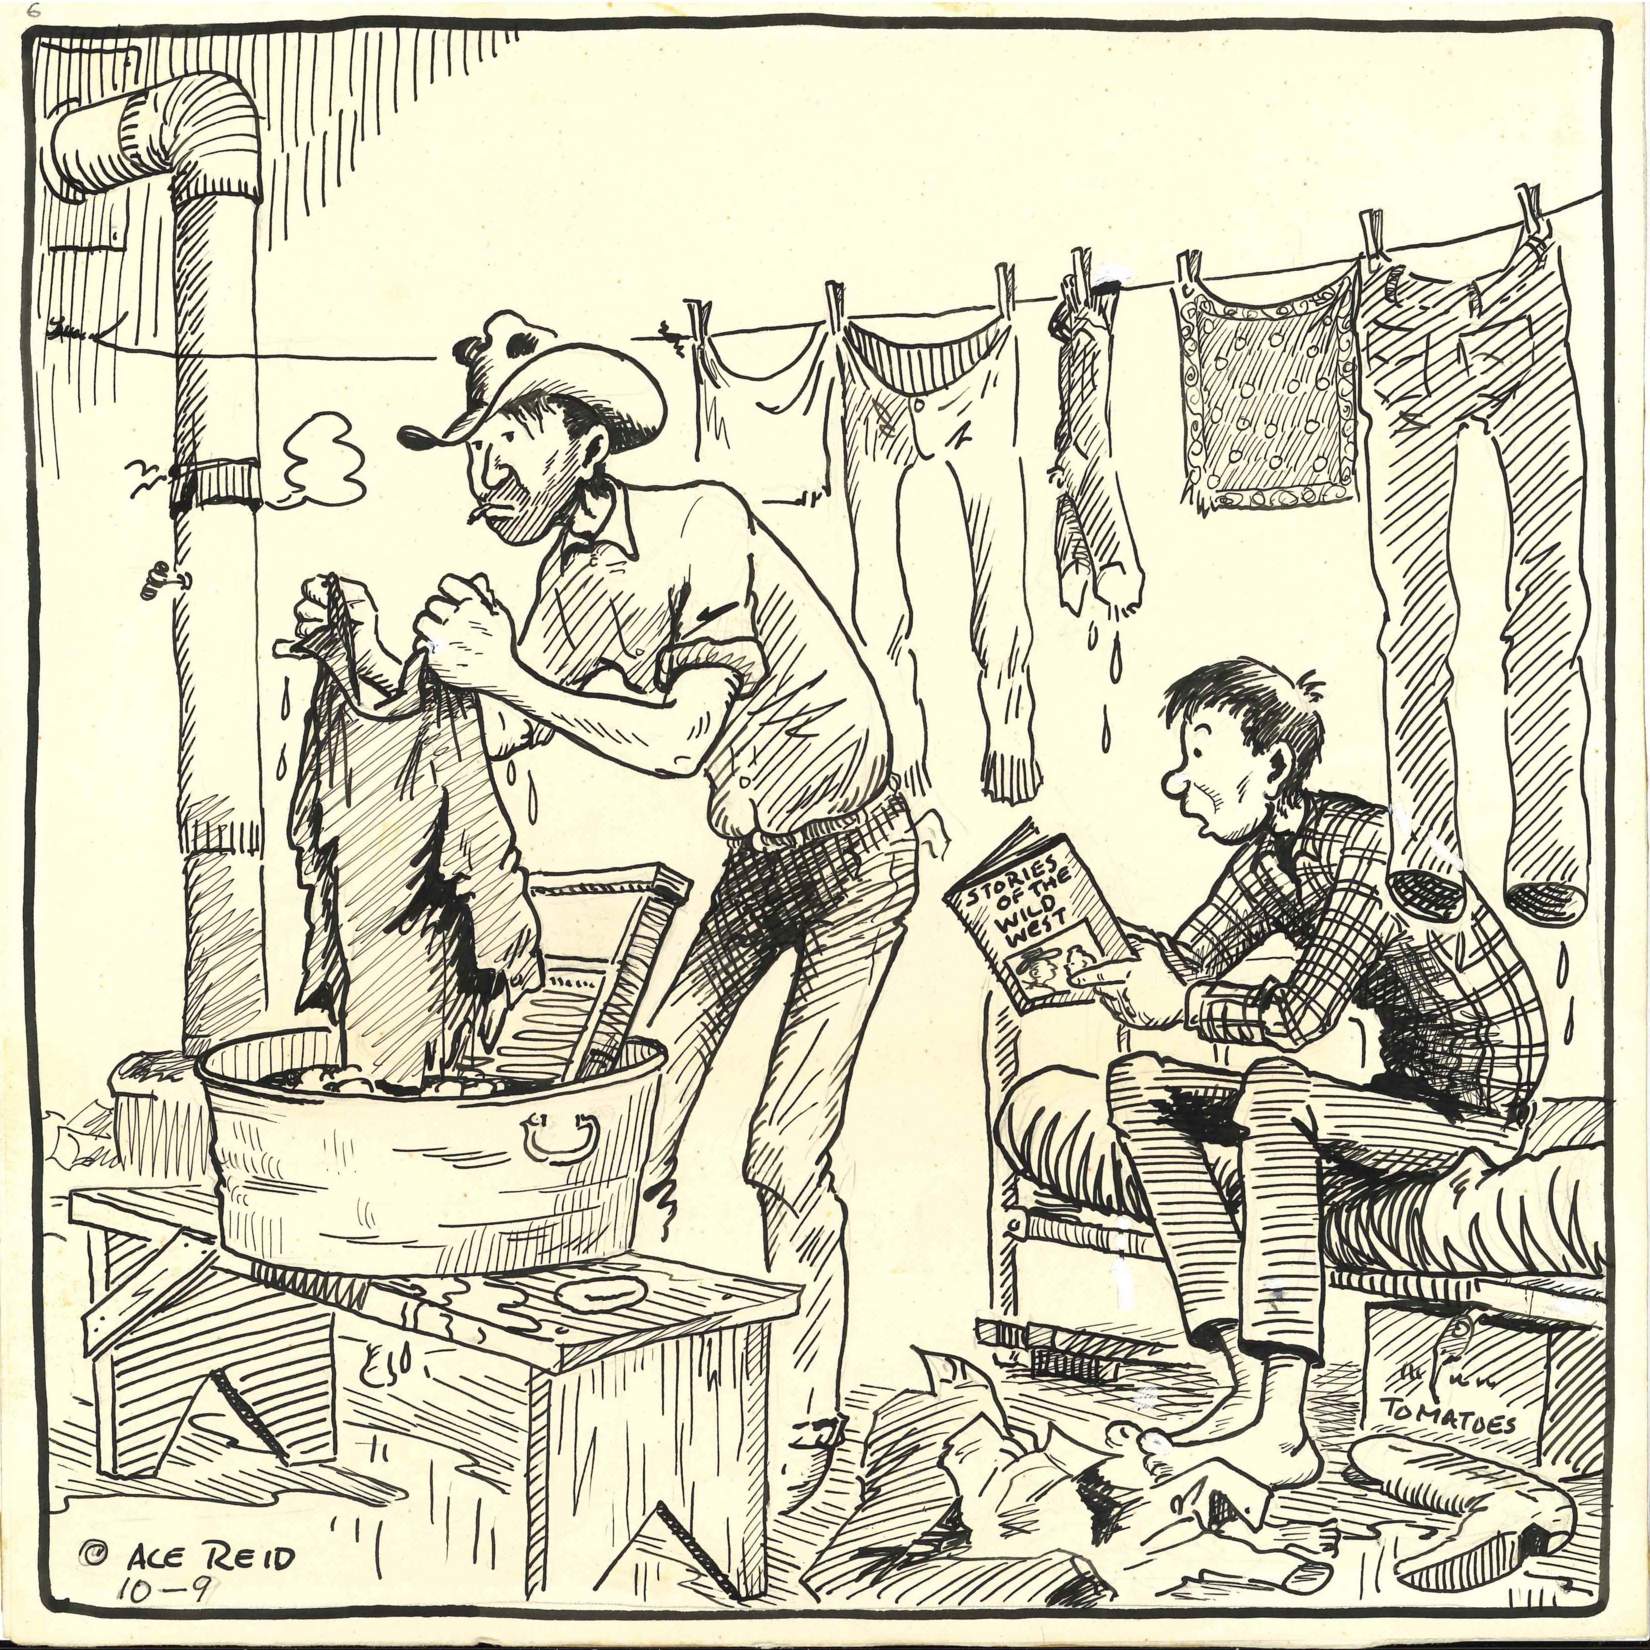 Cartoon "Wild West" by Ace Reid